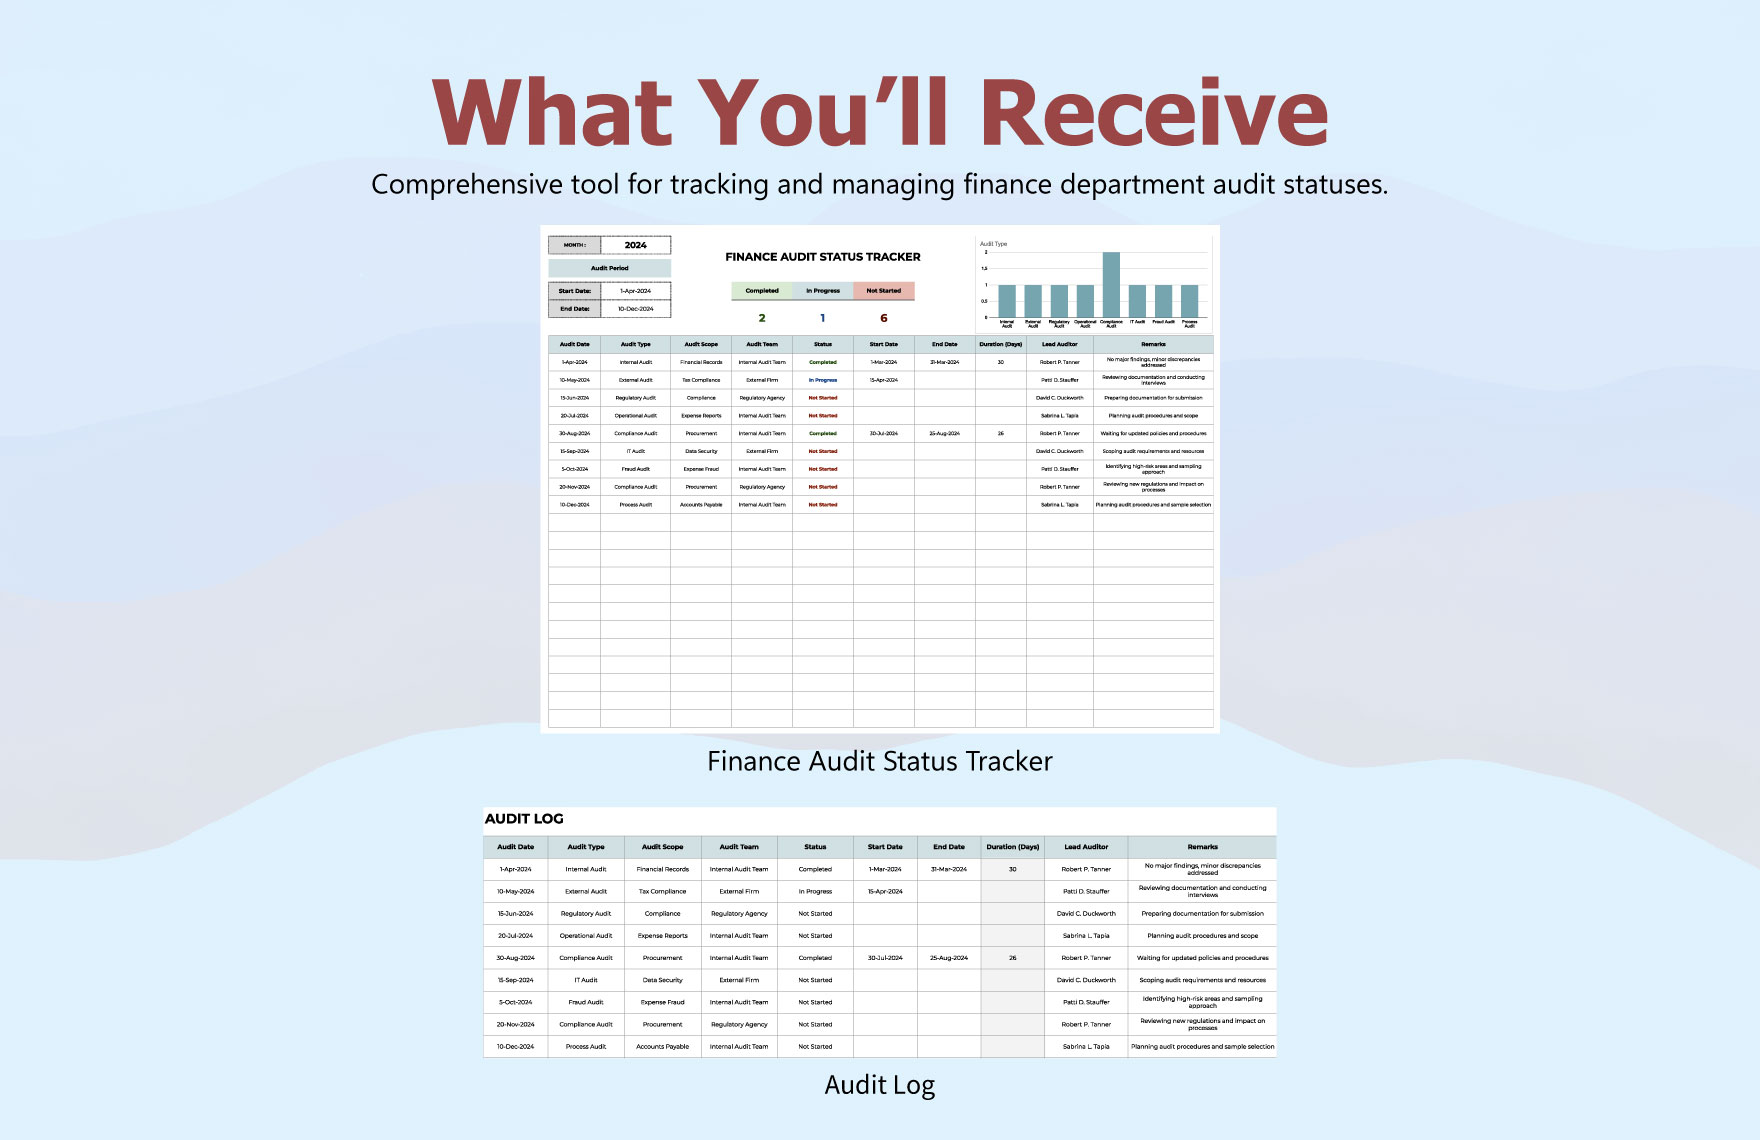 Finance Audit Status Tracker Template